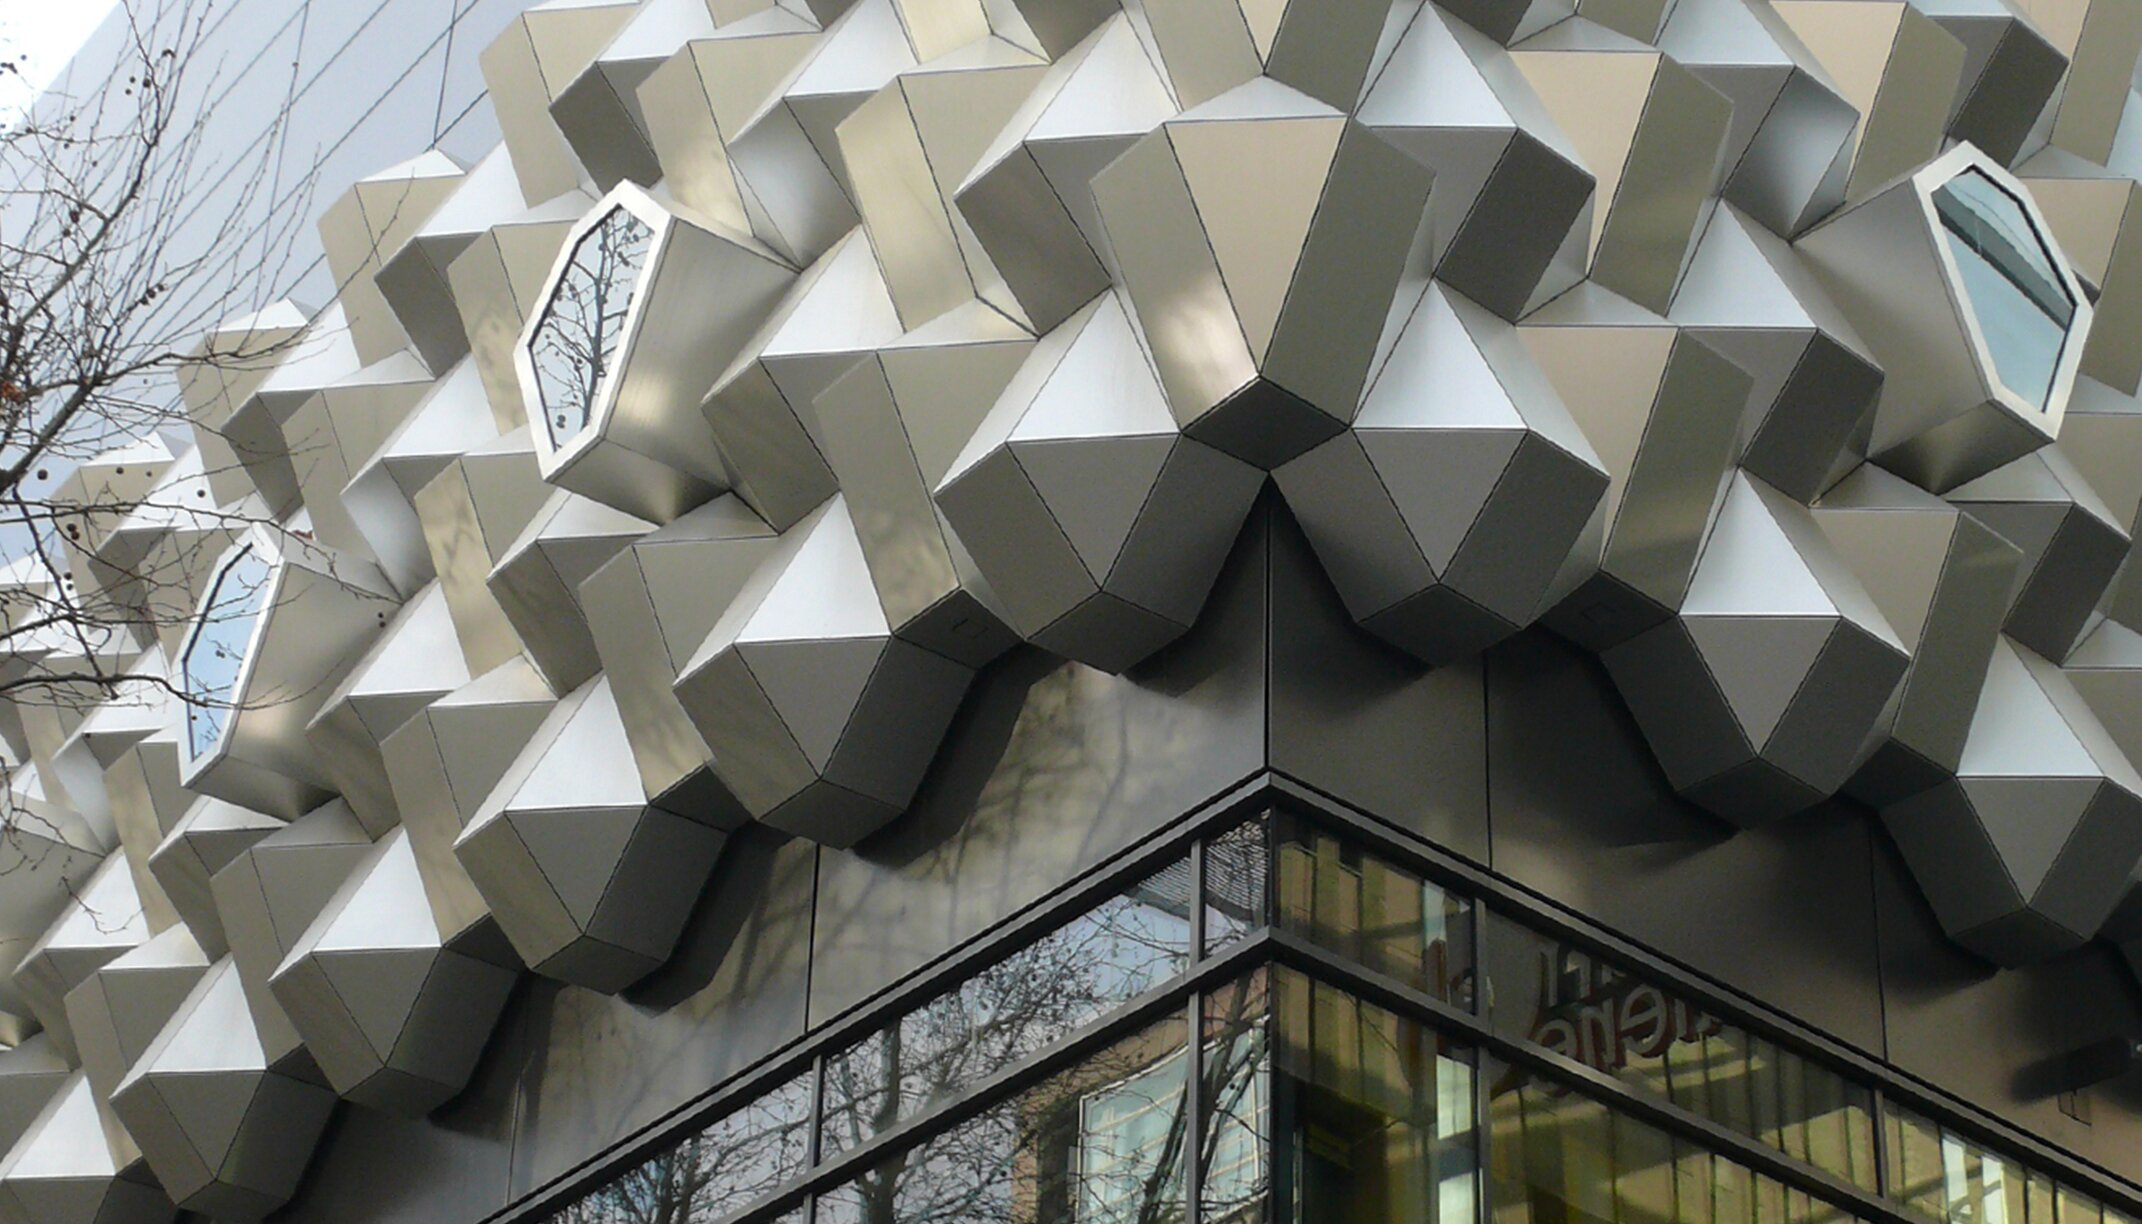 Detailview "Centrum Galerie Dresden"; elegant silver anodised facade surface